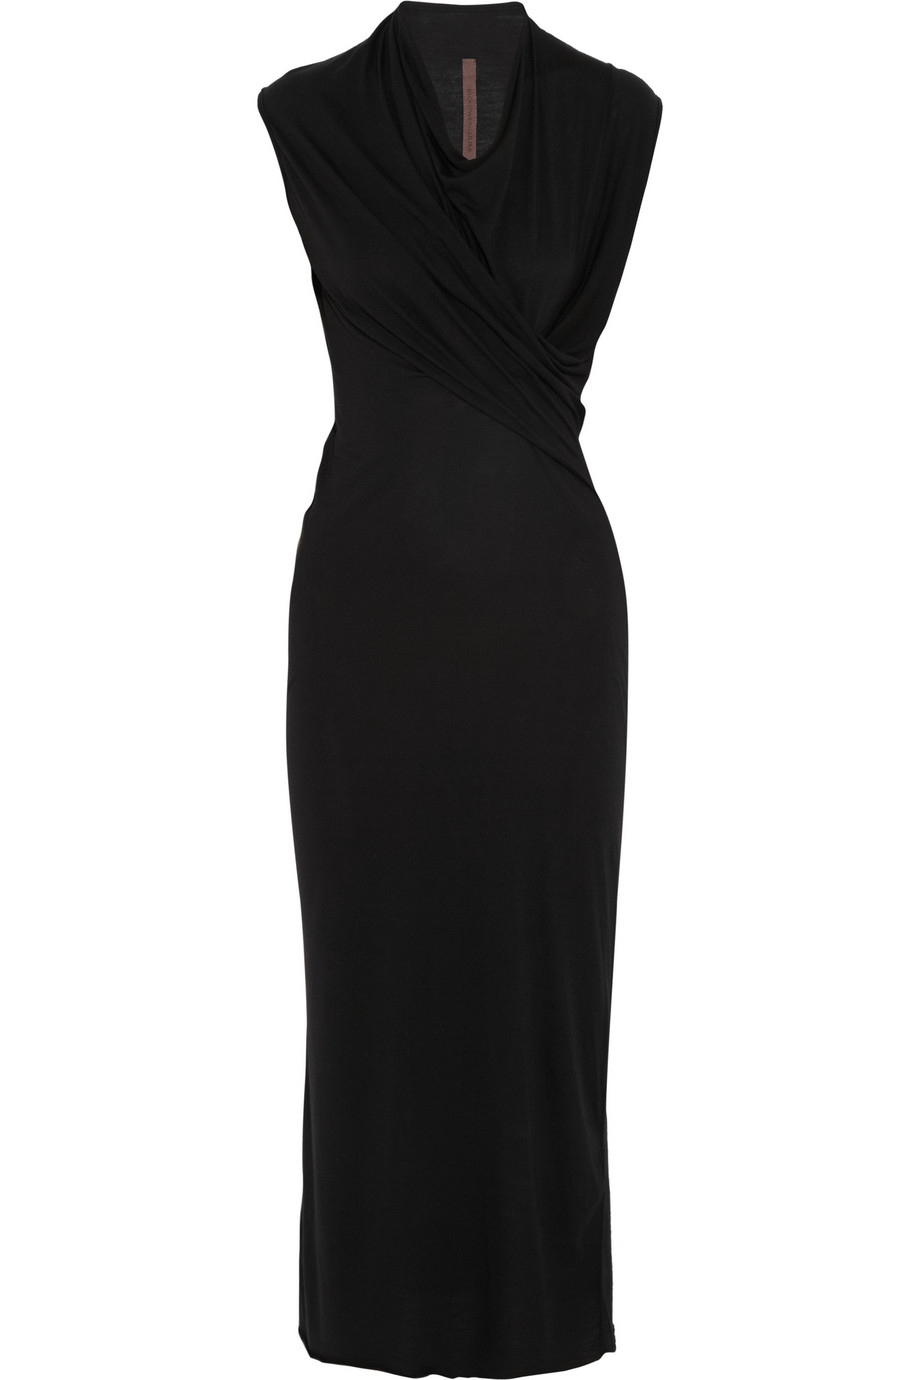 Lyst - Rick Owens Lilies Wrap-effect Stretch-jersey Dress in Black